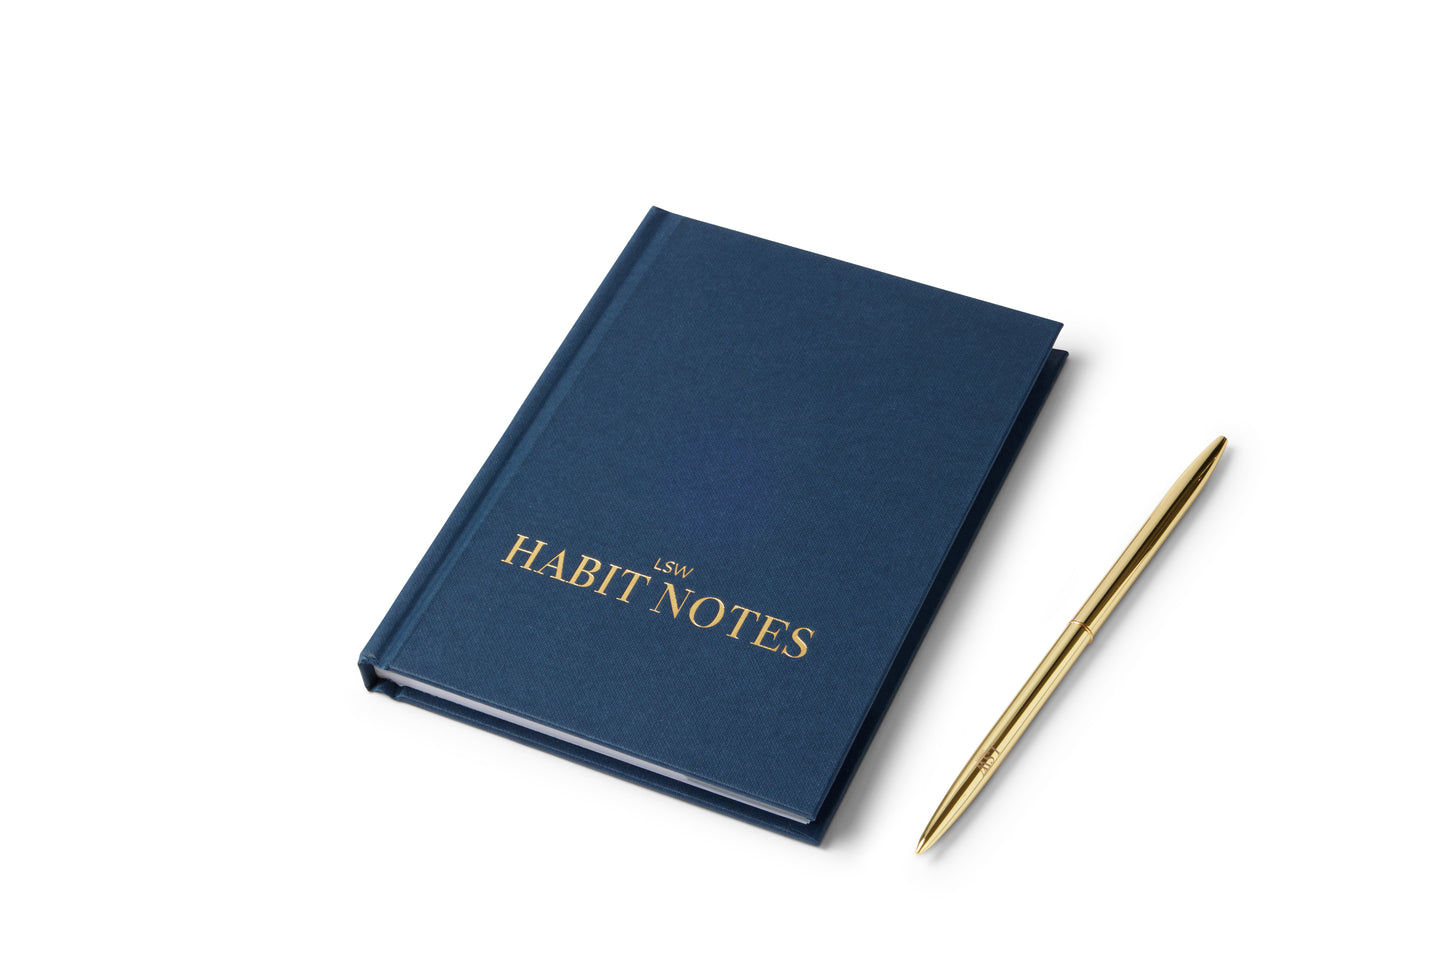 Habit Notes habit setting journal and gold pen